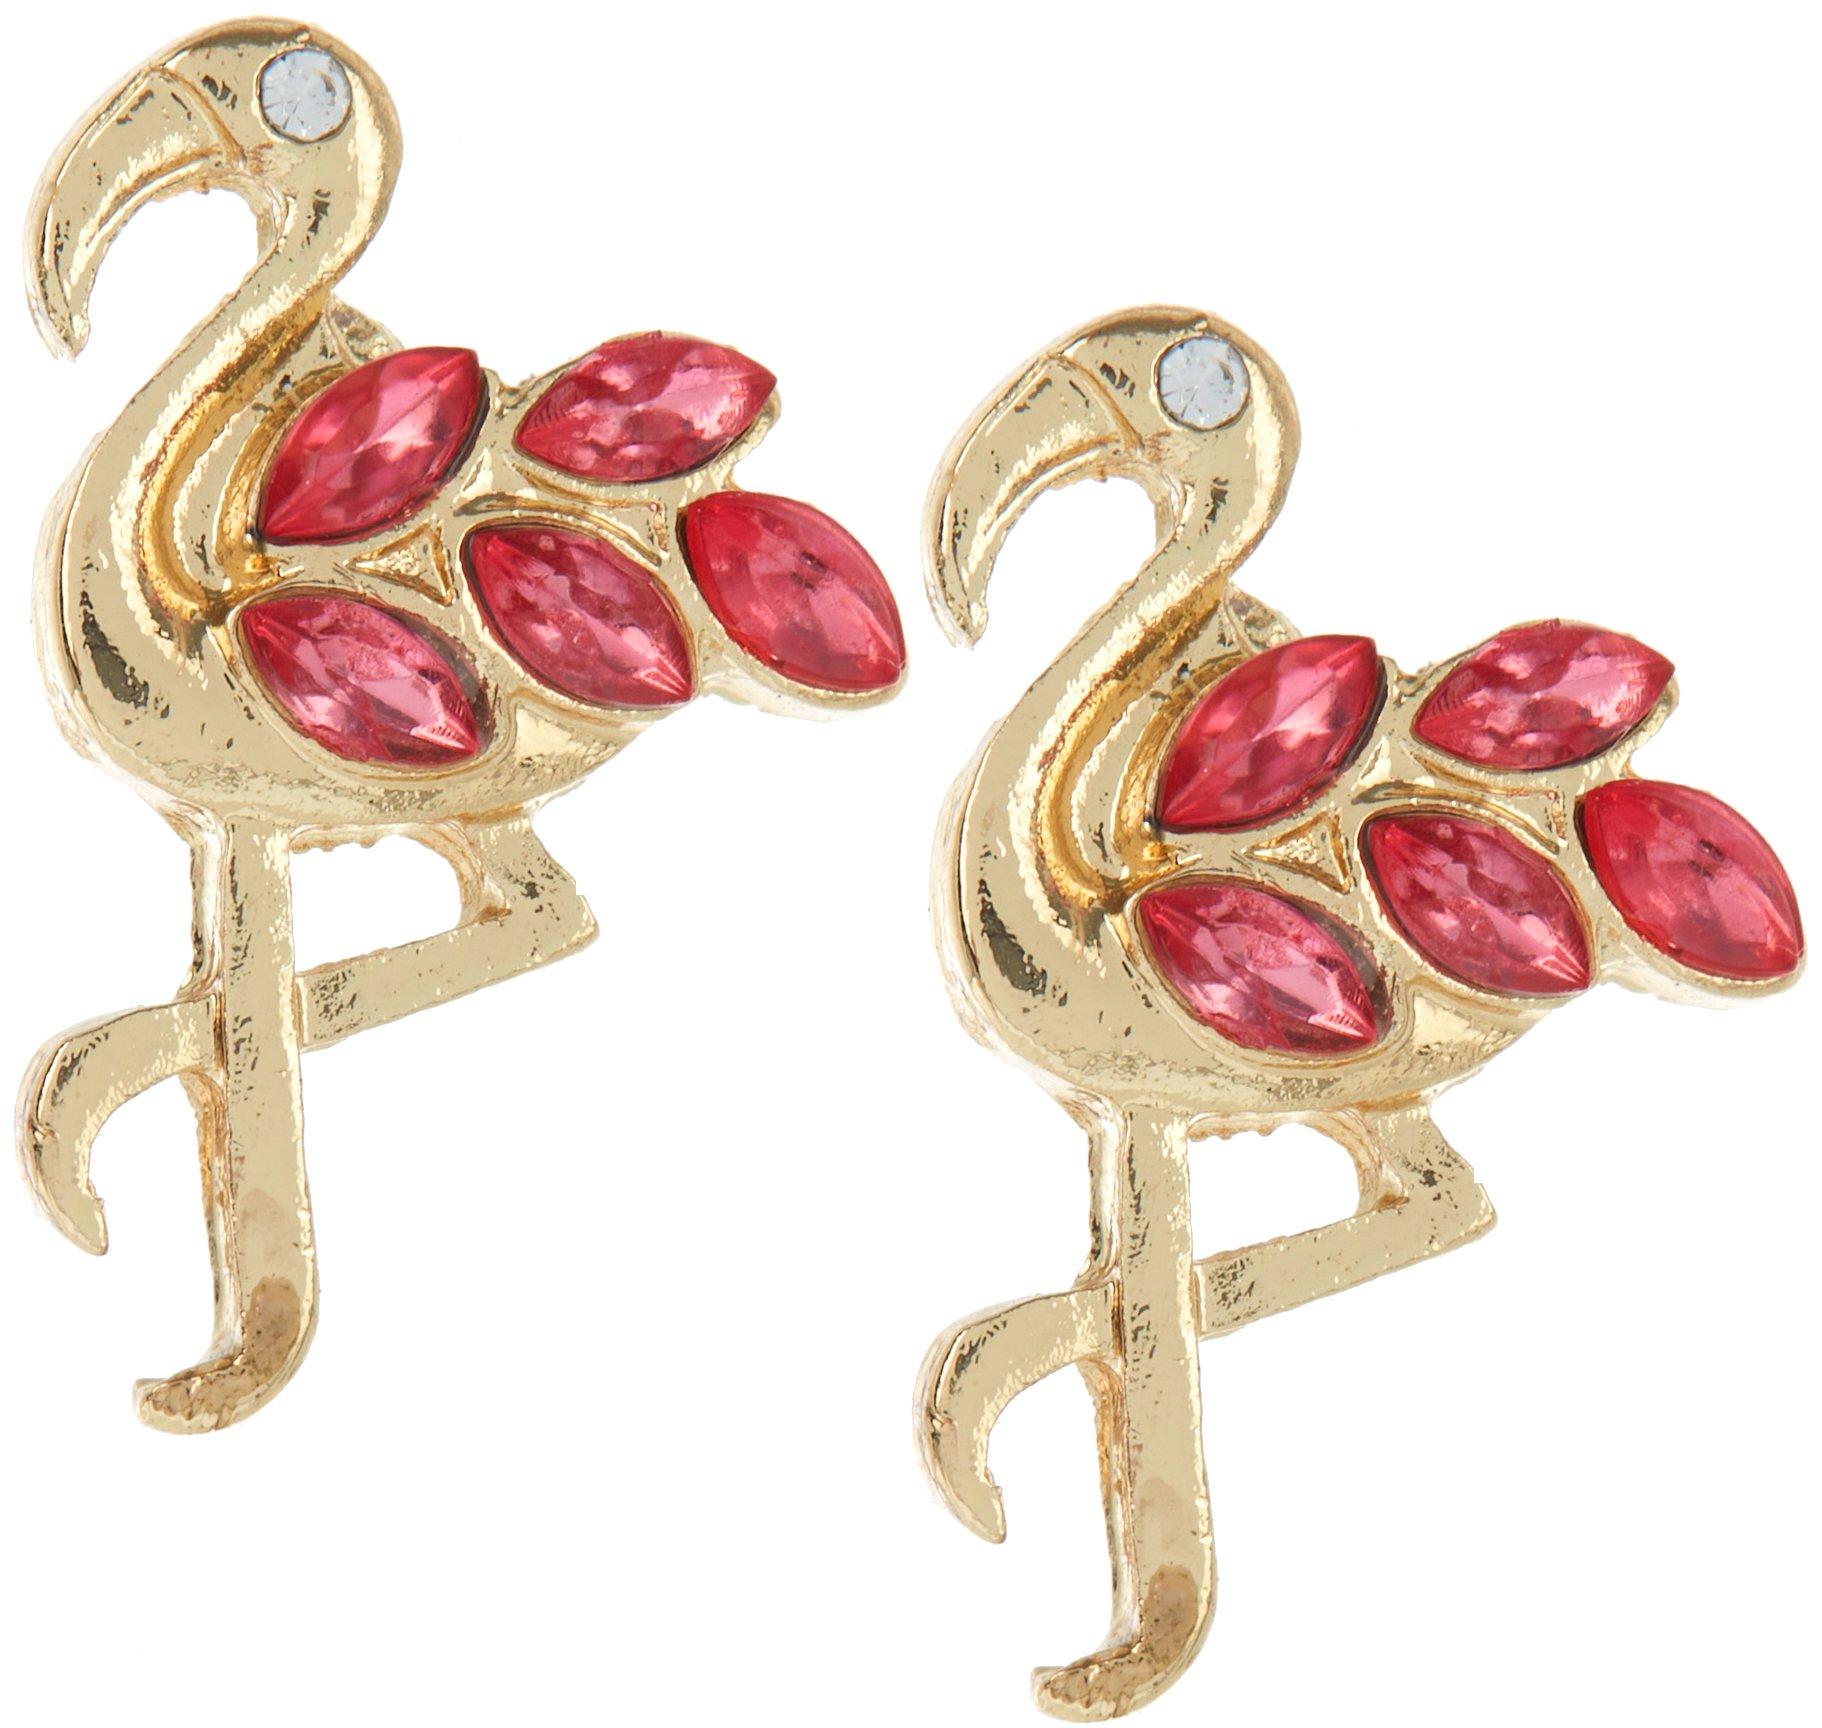 .75 In. Flamingo Gold Tone Stud Earrings